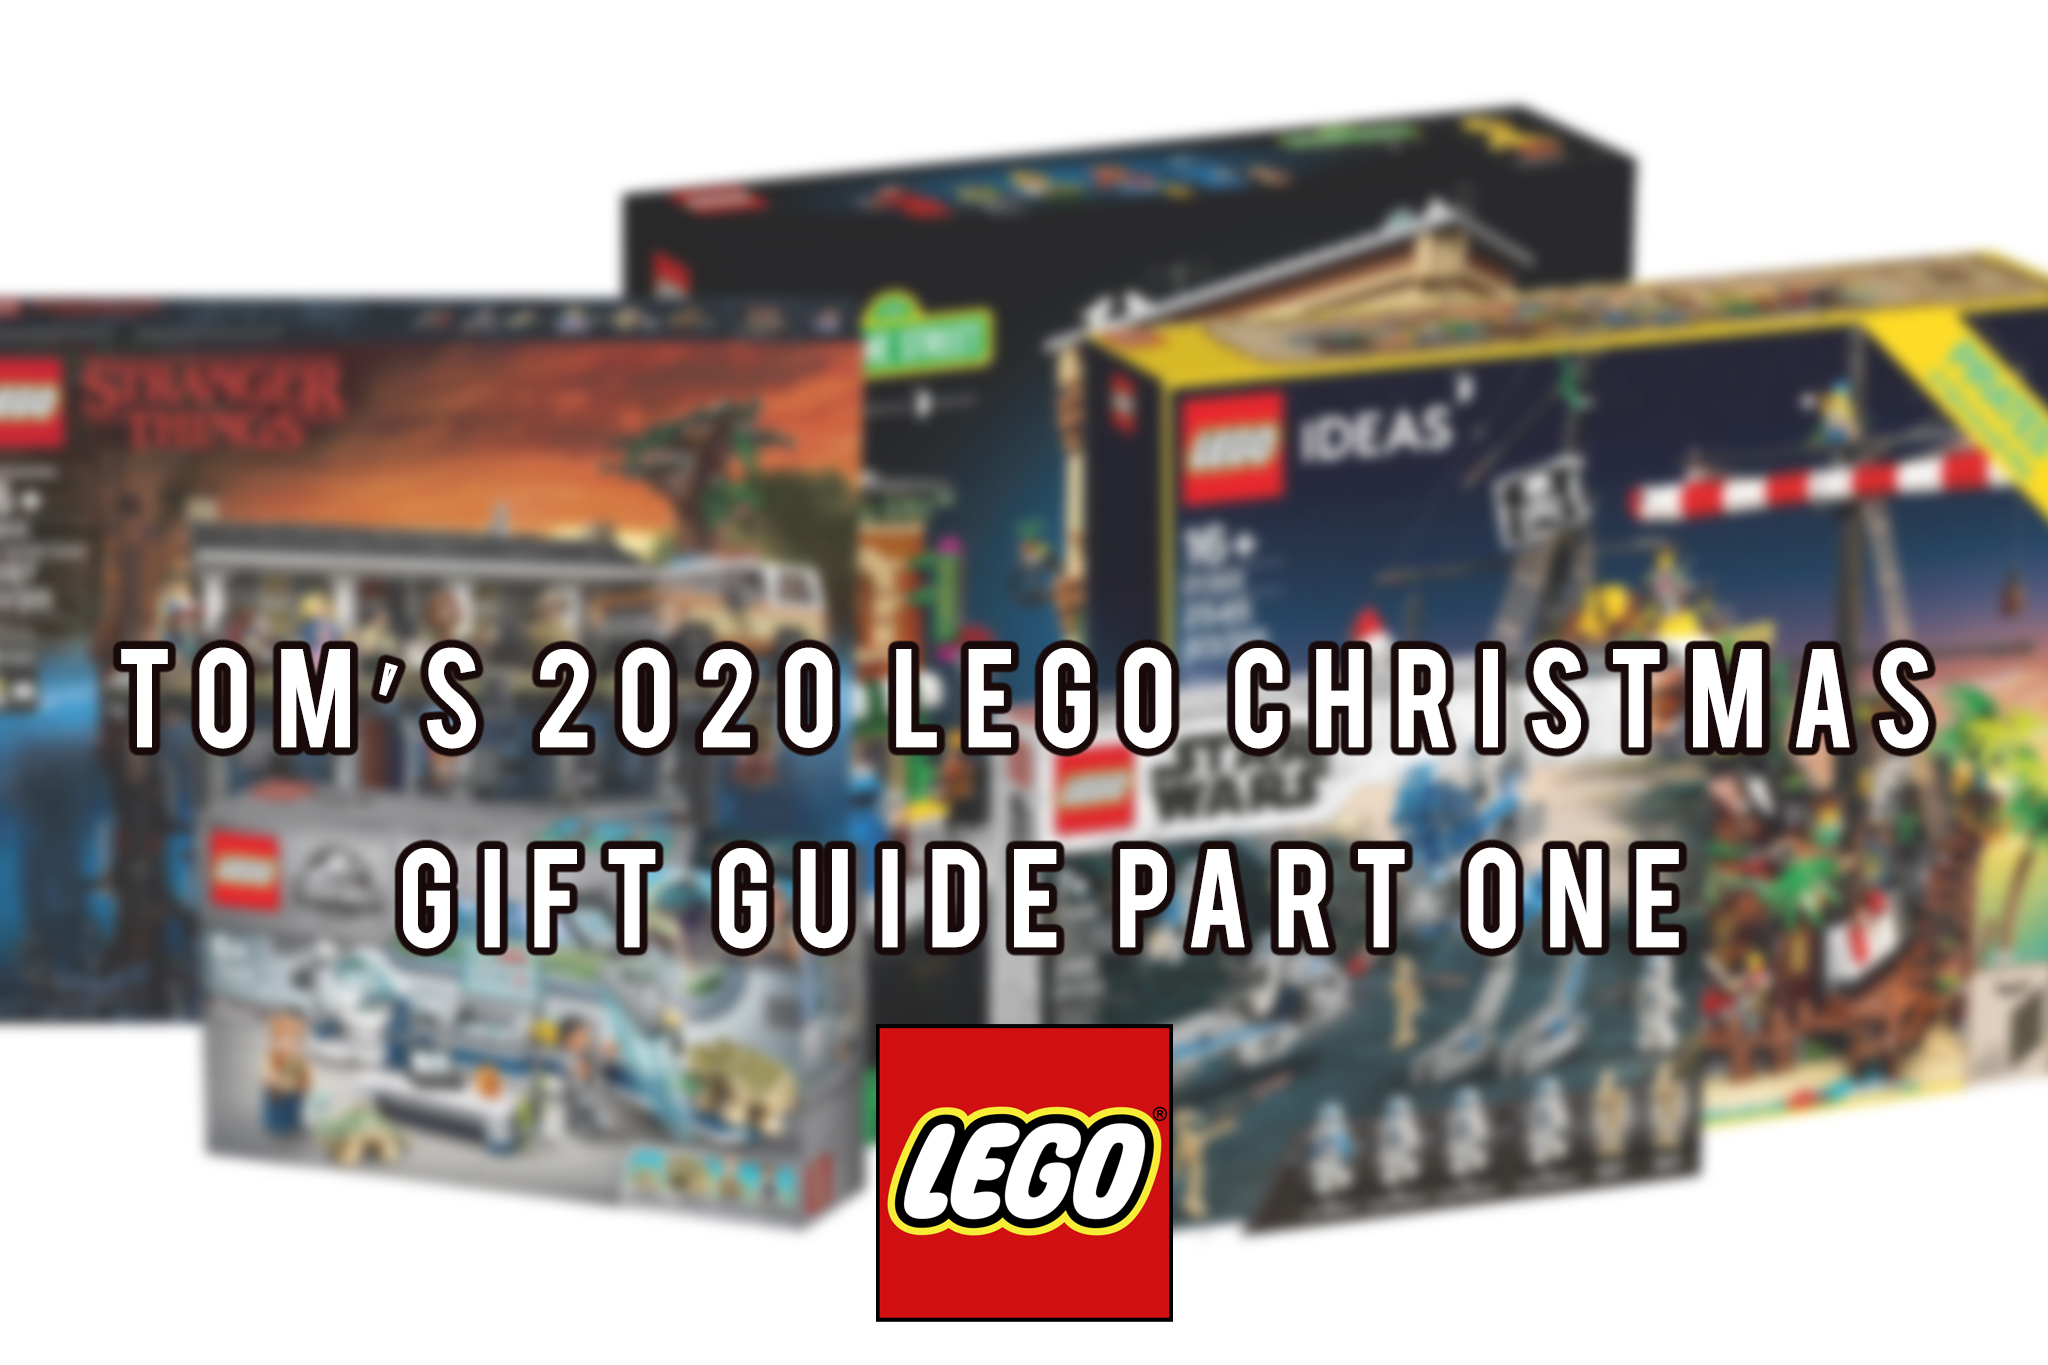 LEGO Christmas Gift Guide - Header Image